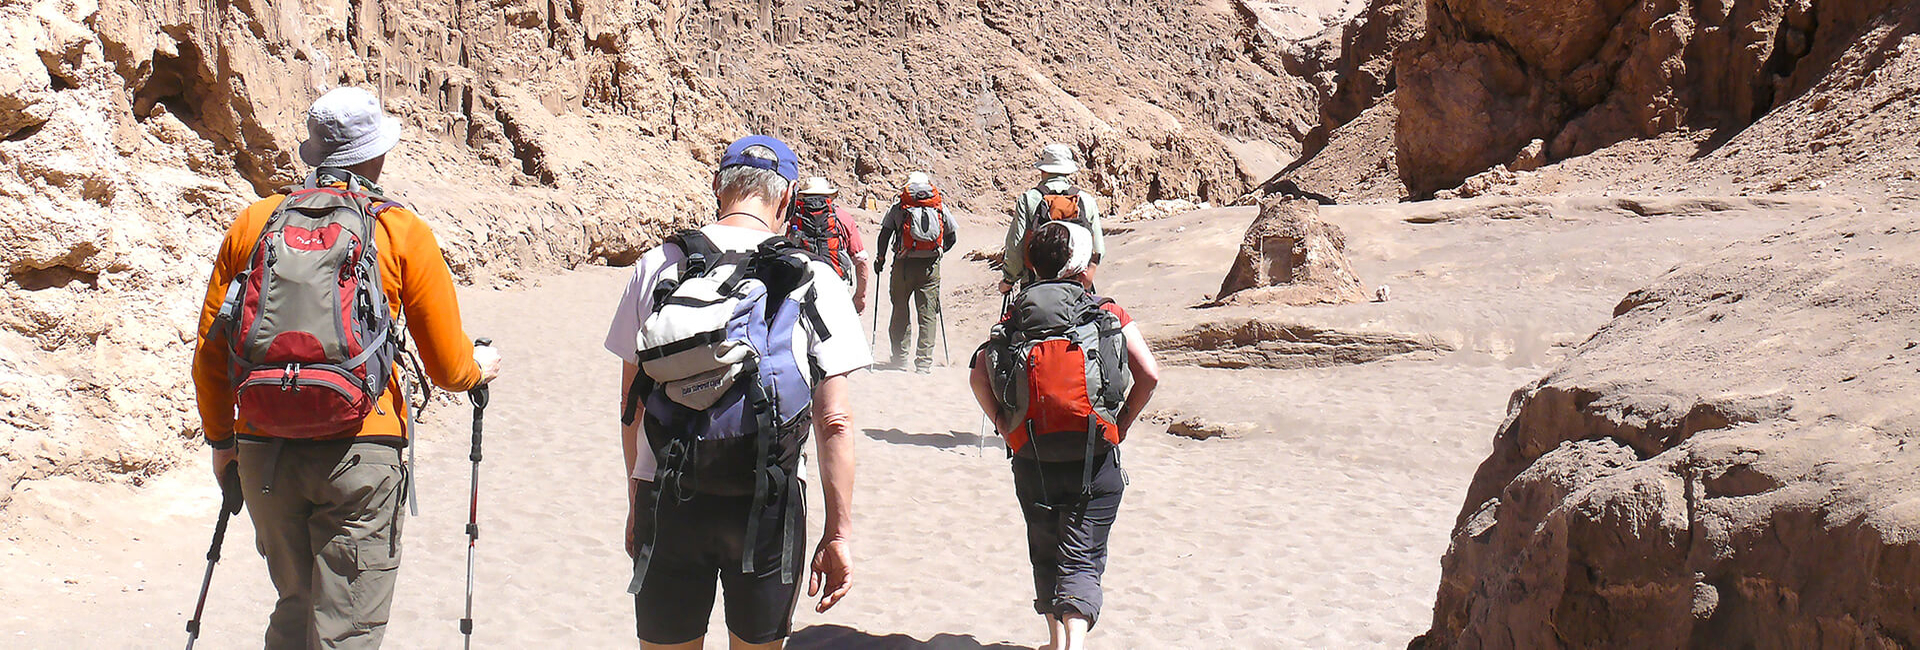 Hiking in the Atacama Desert